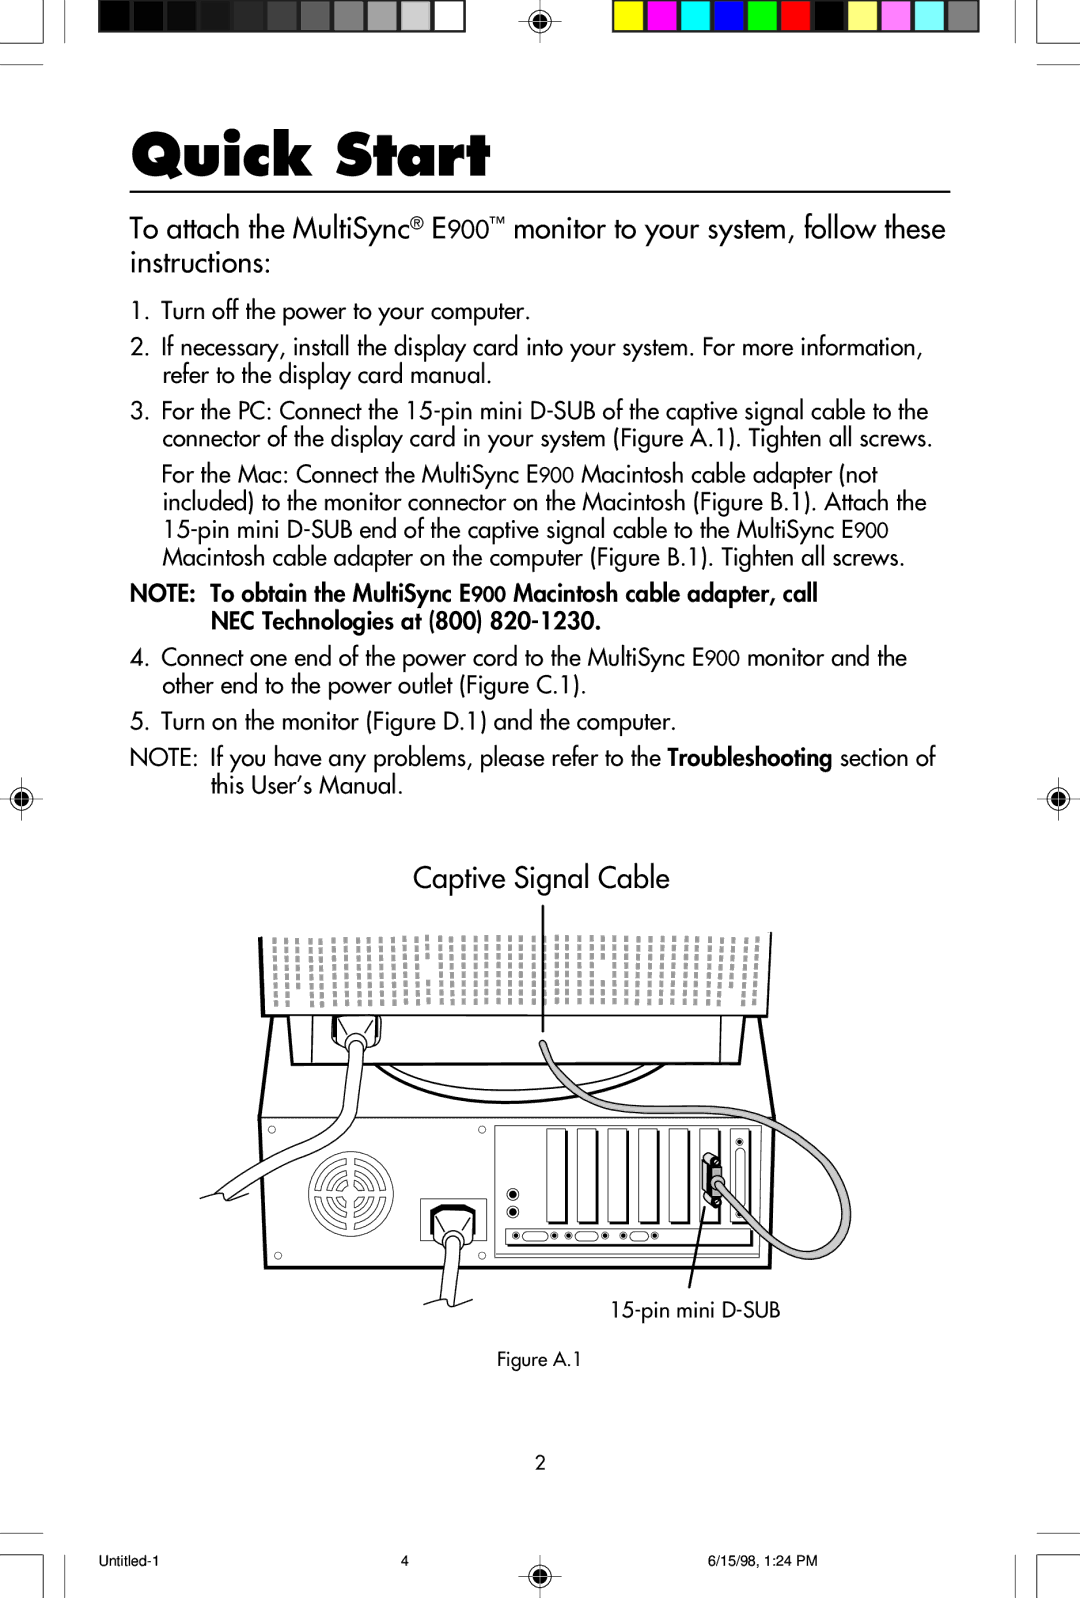 NEC JC-1941UMA user manual Quick Start, Captive Signal Cable 